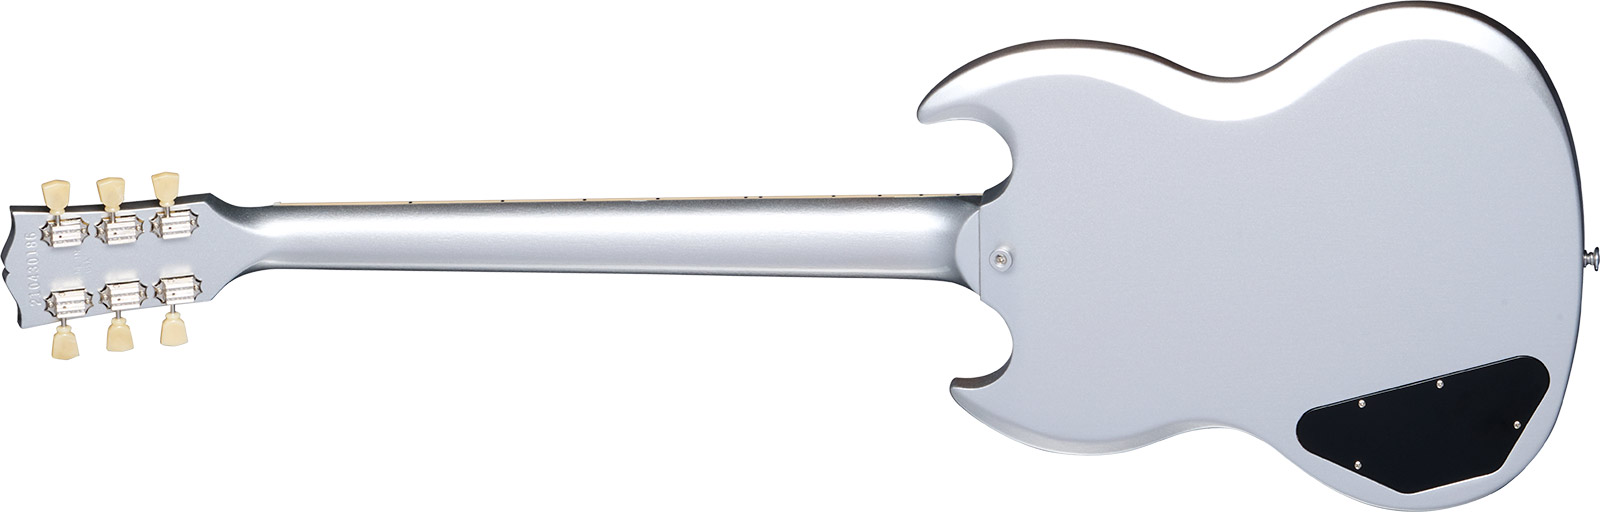 Gibson Sg Standard 1961 Custom Color 2h Ht Rw - Silver Mist - Double cut electric guitar - Variation 1